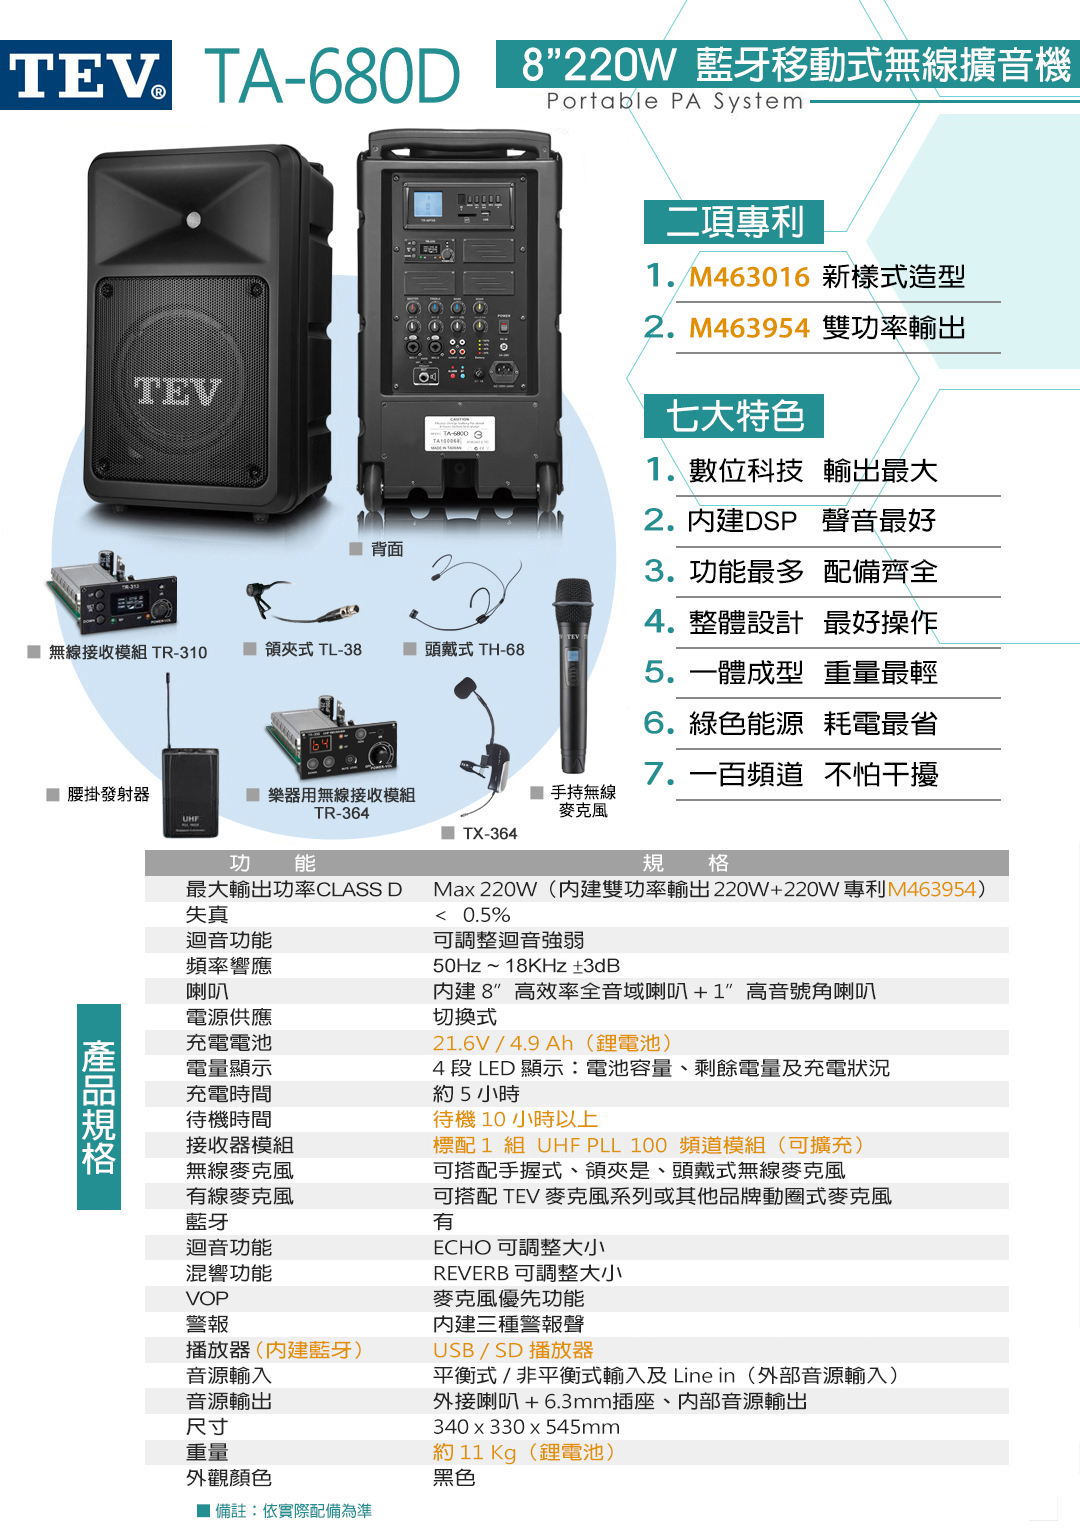 TA-60D 220W 藍牙移動式無線擴音機Portable PA SystemTEV二項專利.M463016 新樣式造型2. M463954 雙功率輸出七大特色1.數位科技 輸出最大2.DSP 聲音最好 背面3.功最多 配備齊全4.整體設計 最好操作 無線接收模組 TR-310  式 TL-38 頭戴式 TH-685.一體成型 重量最輕6.綠色能源 耗電最省7.一百頻道 不怕干擾TB-300 樂器用無線接收模組TM-8100TR-364TX-364功能規 格最大輸出功率CLASS D失真迴音功能頻率響應喇叭電源供應充電電池電量顯示充電時間待機時間接收器模組無線麥克風有線麥克風藍牙迴音功能混響功能VOP警報播放器(藍牙)音源輸入音源輸出尺寸重量Max 220W(內建雙功率輸出220W+220W專利M463954) 0.5%可調整迴音強弱50Hz~18KHz±3dB內建8高效率全音域喇叭+1高音號角喇叭切換式11.1V/5200mAh(電池)x24 段 LED 顯示:電池容量、剩餘電量及充電狀況約5小時待機10小時以上標配1 組 UHF PLL 100 頻道模組(可擴充)可搭配手握式、領夾是、頭戴式無線麥克風可搭配 TEV 麥克風系列或其他品牌動圈式麥克風有ECHO 可調整大小REVERB 可調整大小麥克風優先功能内建三種警報聲USB/SD 播放器平衡式/非平衡式輸入及 Line in(外部音源輸入)外接喇叭+6.3mm插座、內部音源輸出340 x 330 x 545mm約 11 (鋰電池)外觀顏色黑色 備註:依實際配備為準